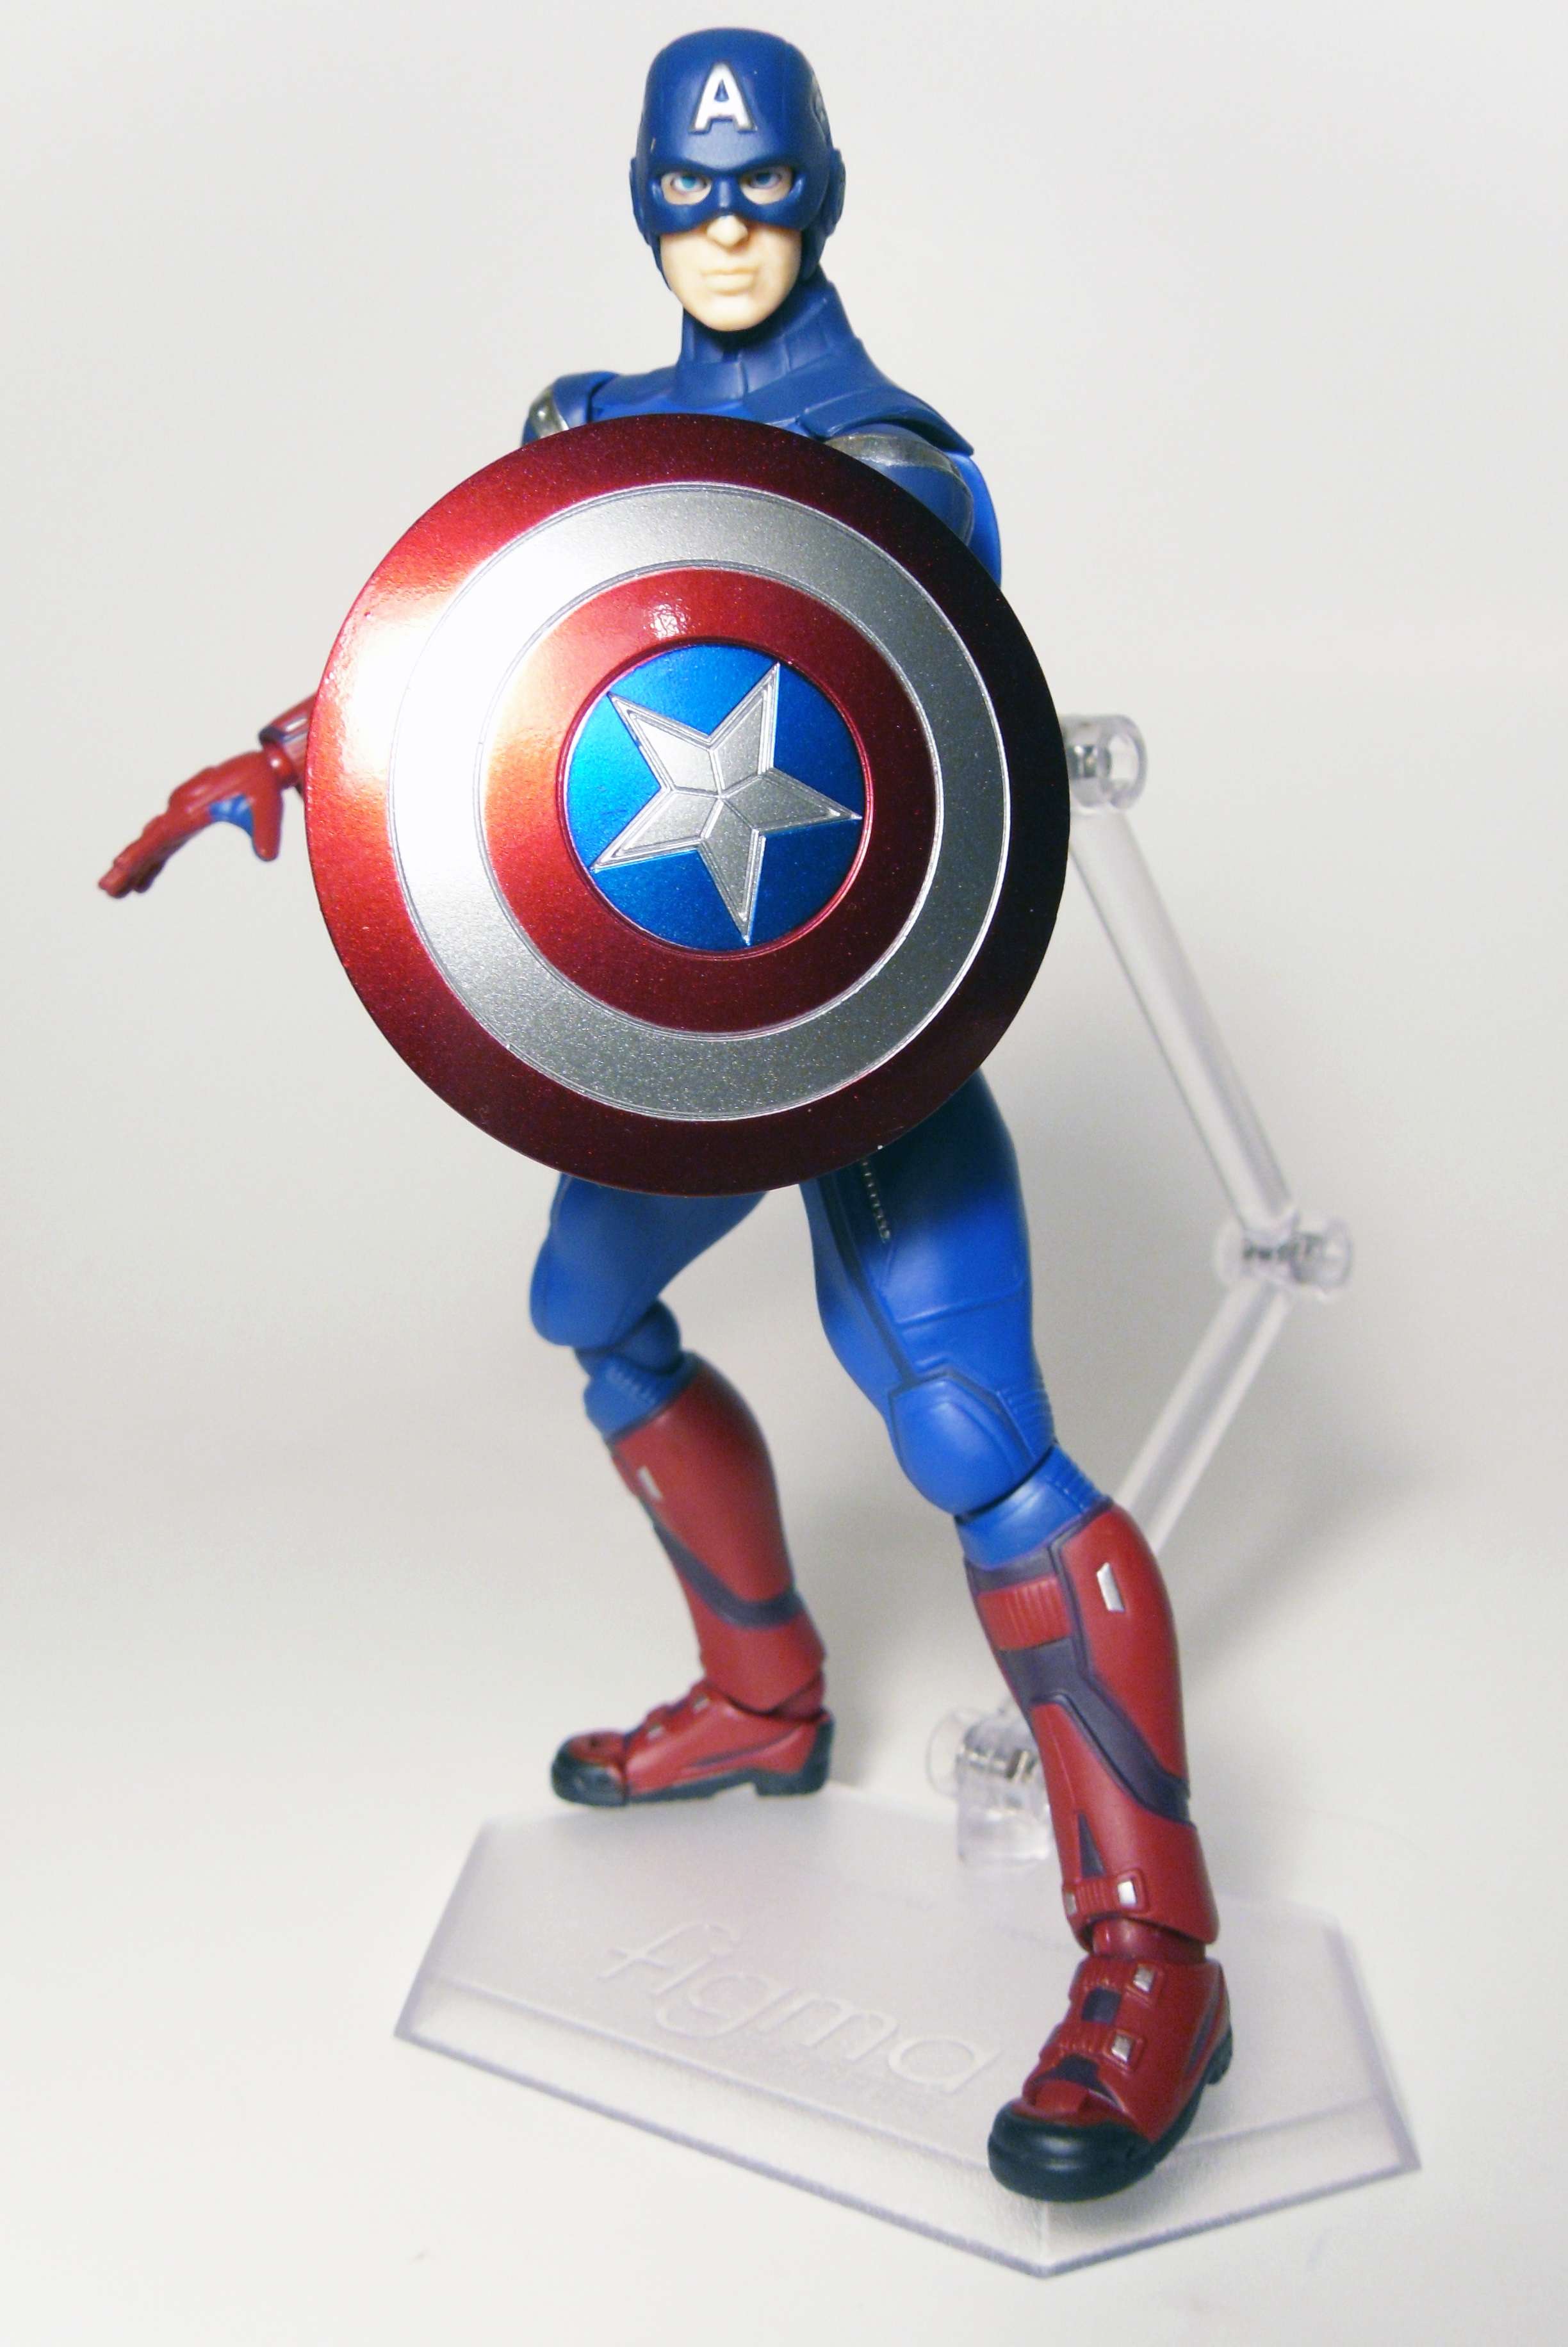 Marvel The Avengers Captain America Figma 226 PVC Action Figure Model Toy 